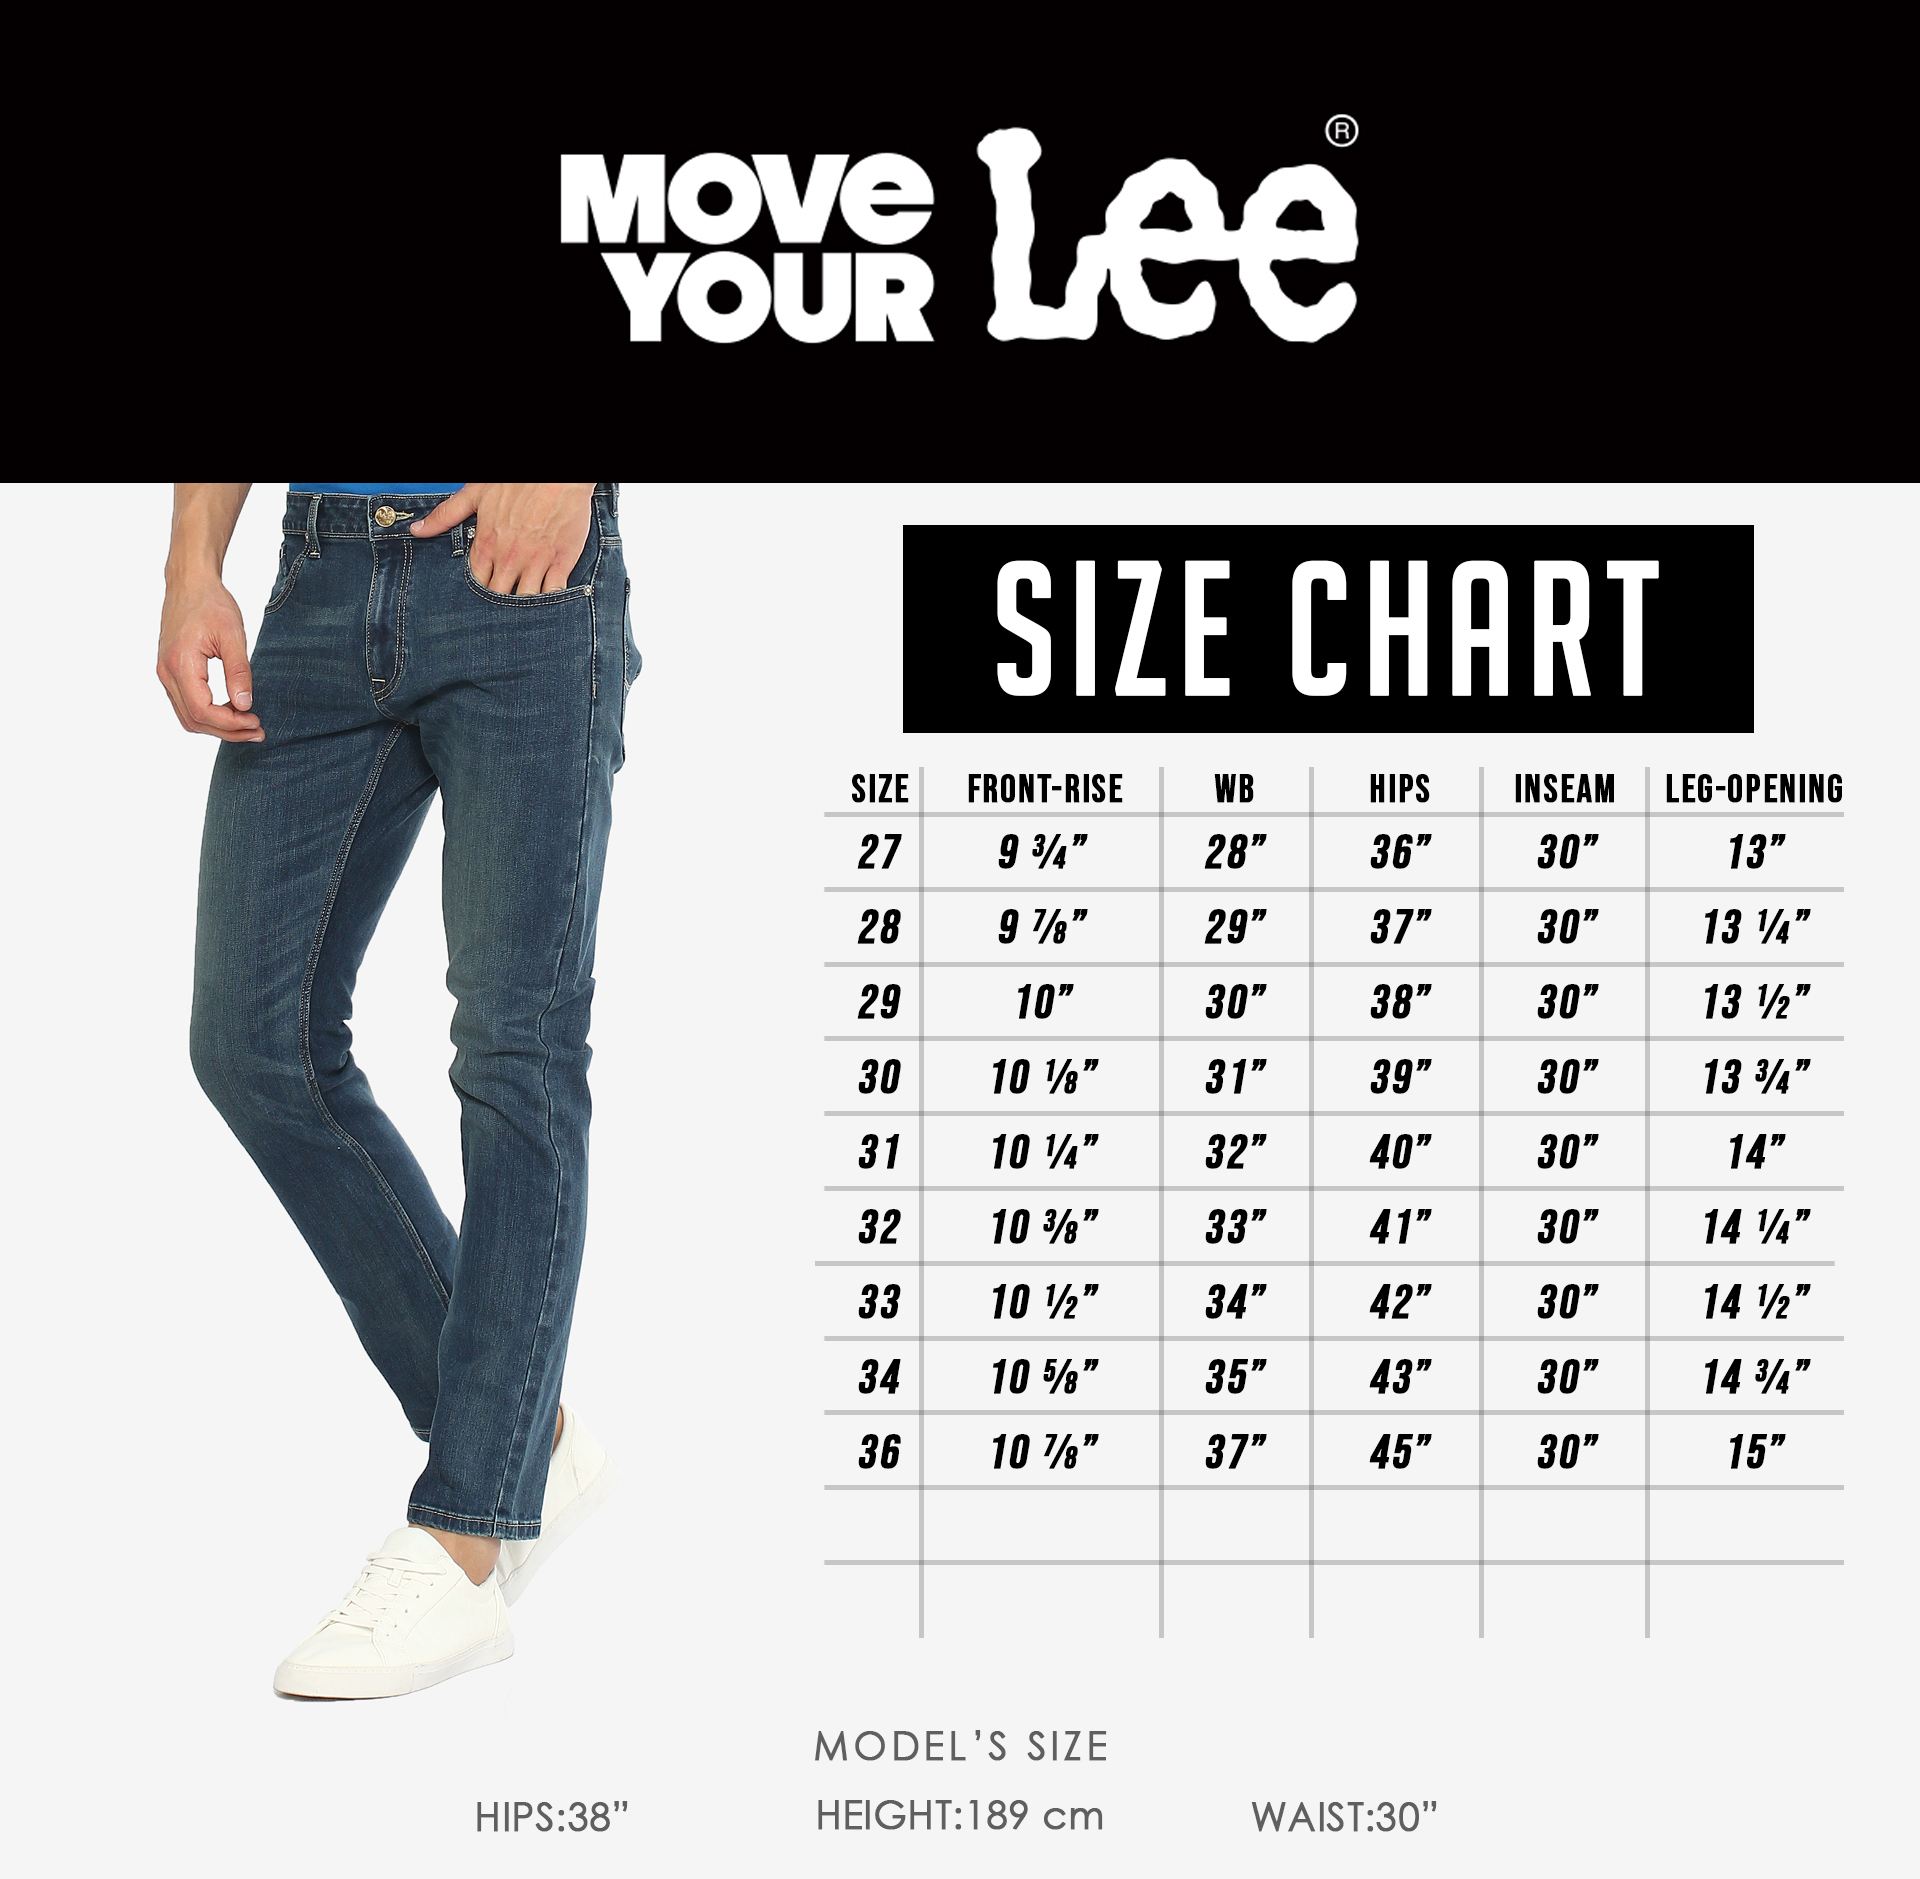 lee low rise mens jeans